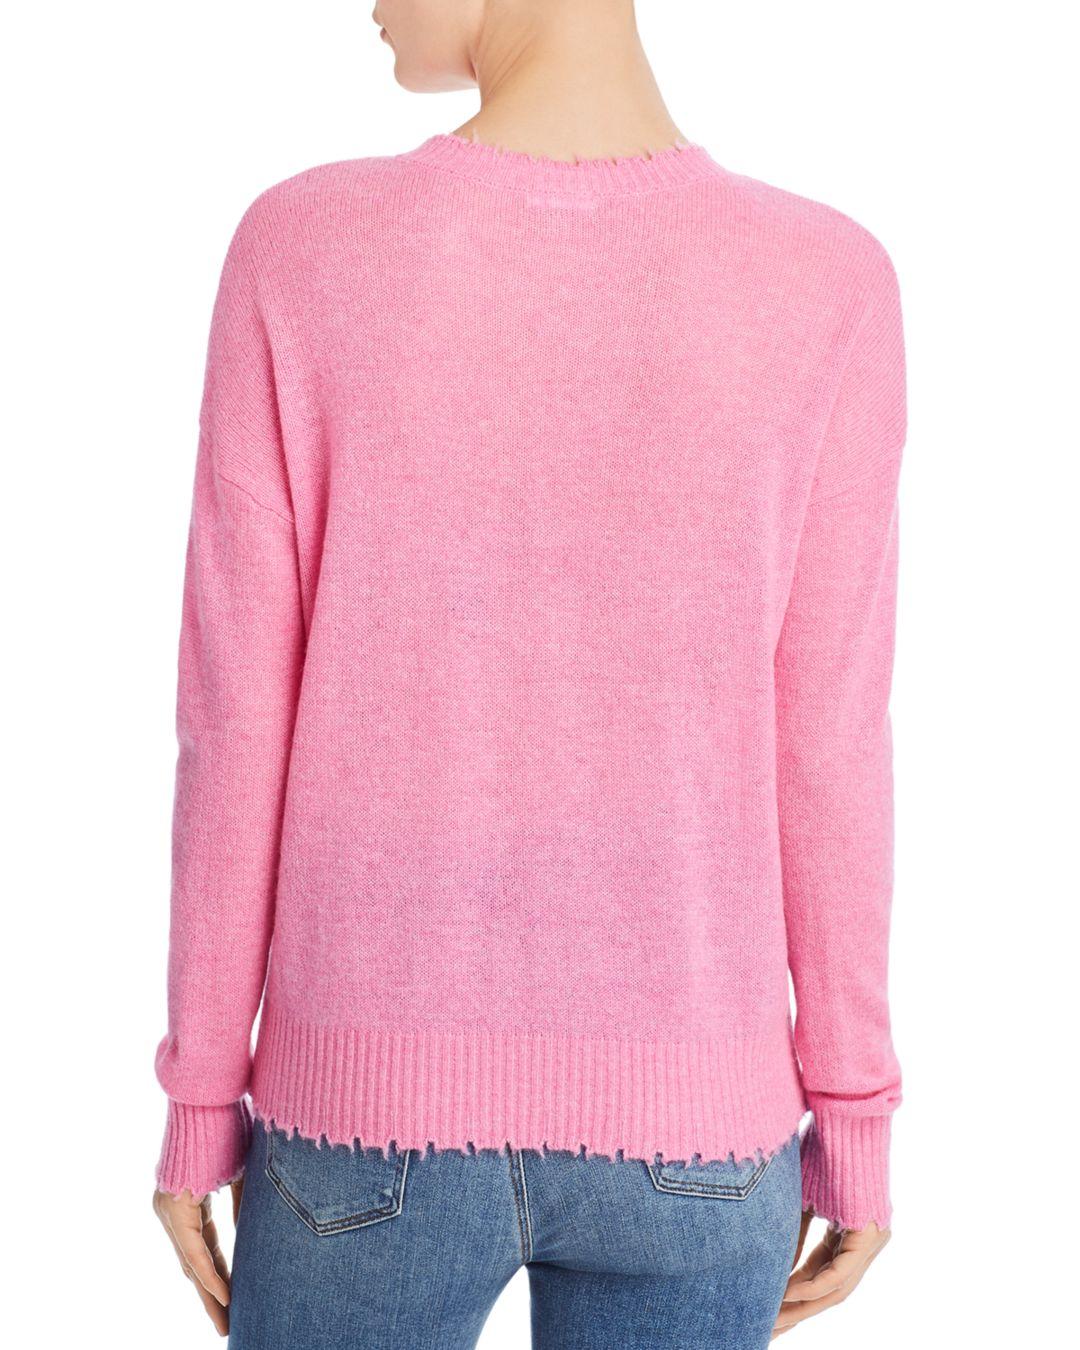 Minnie Rose Distressed Cashmere Crewneck Sweater in Pink - Lyst